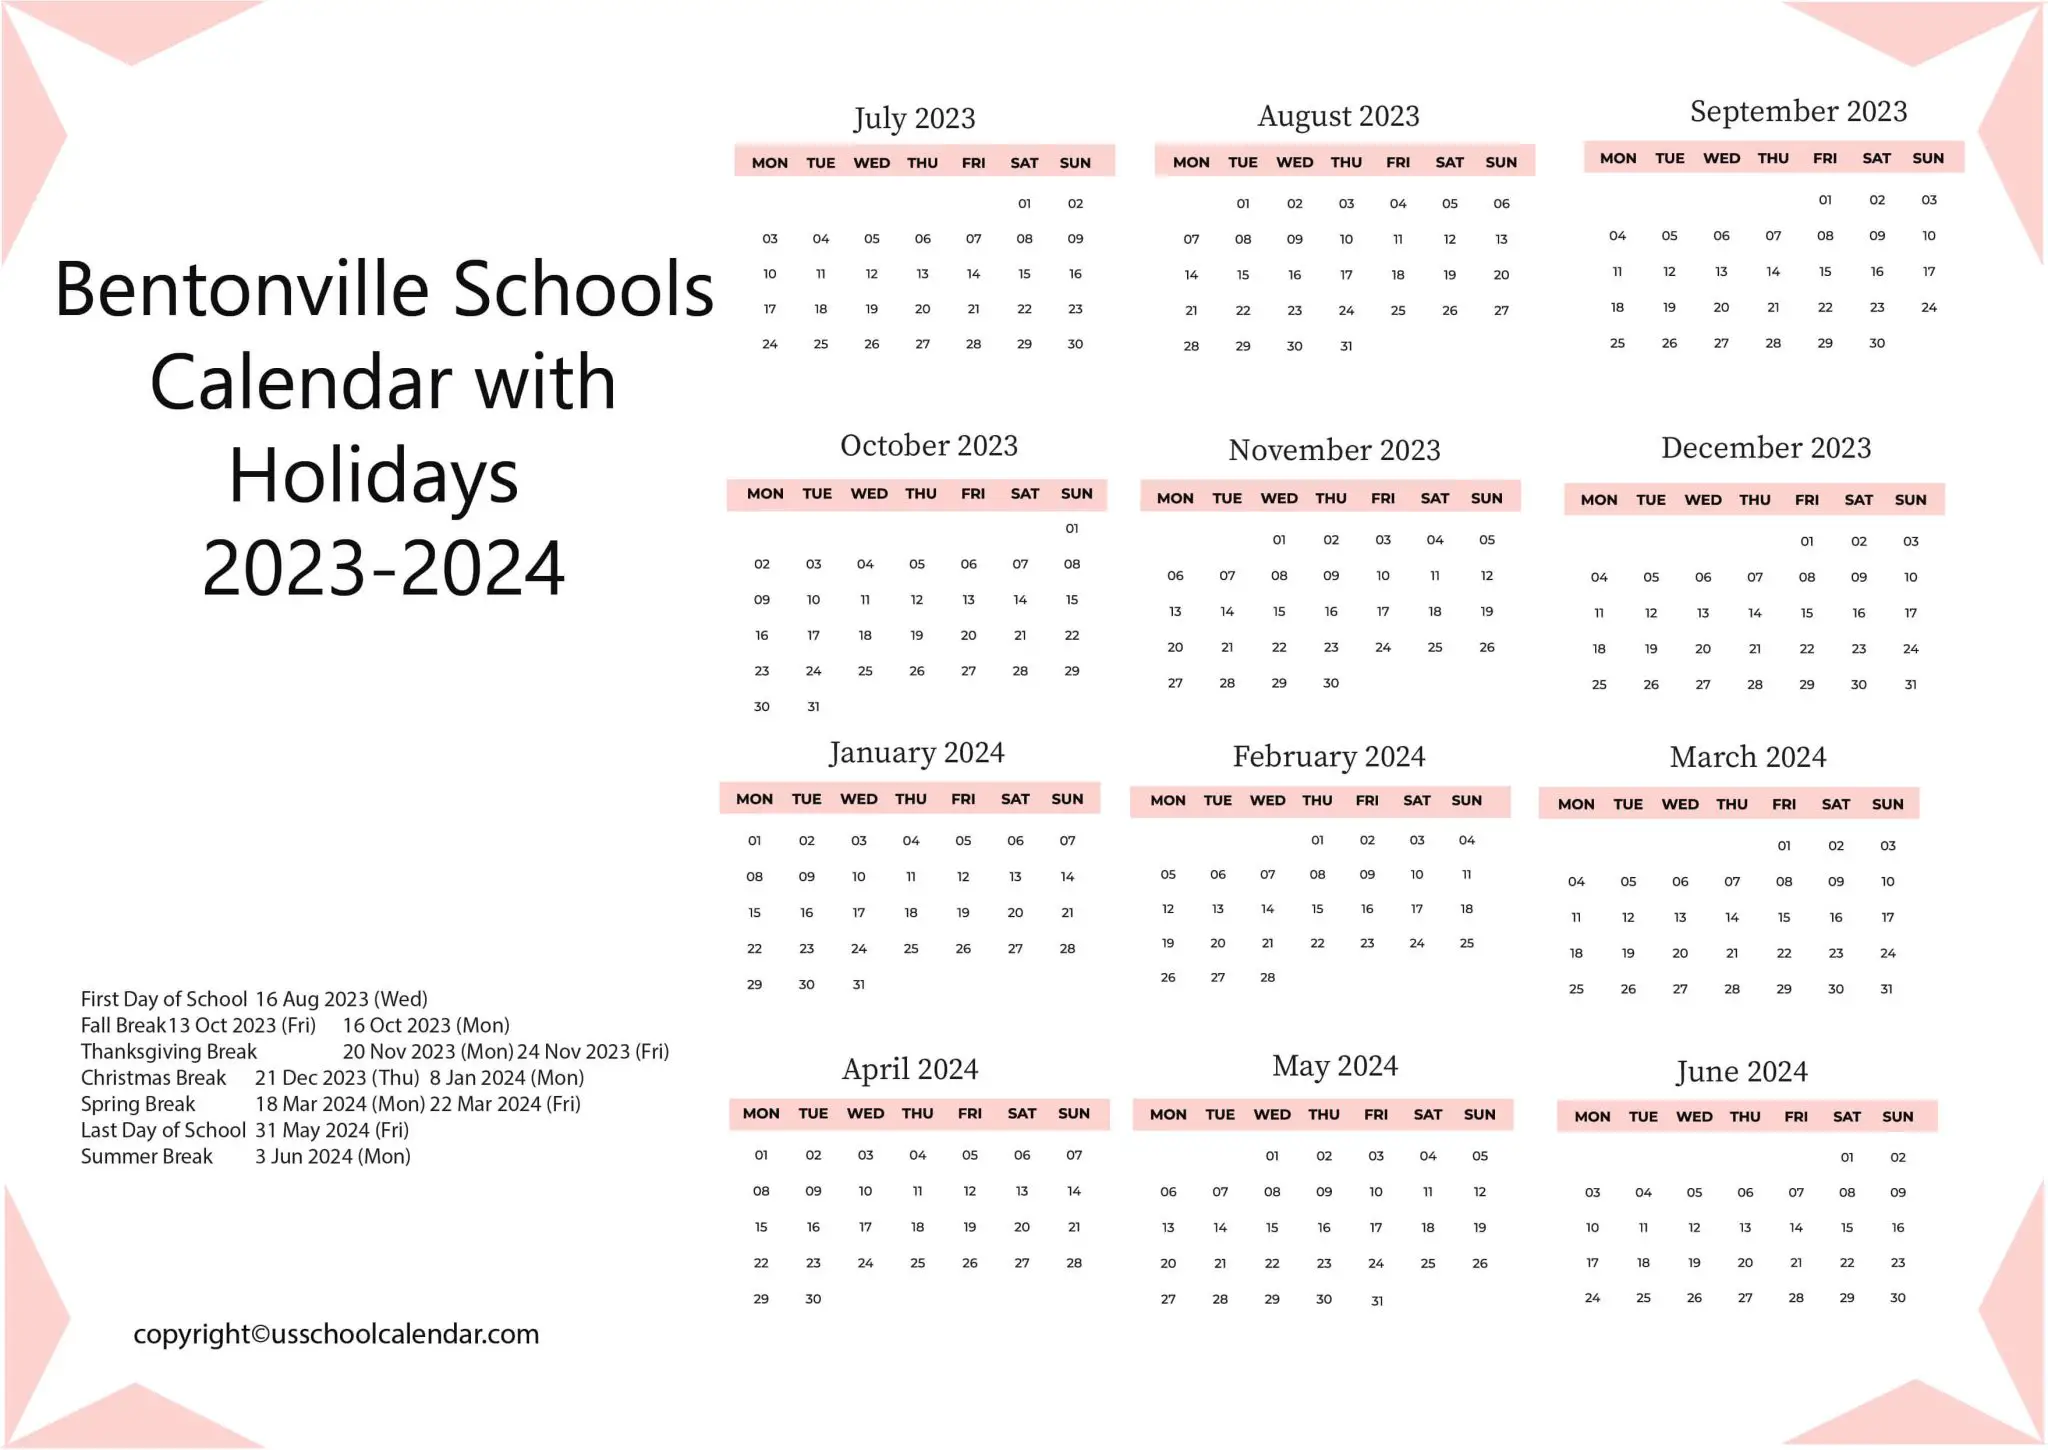 bentonville-schools-calendar-with-holidays-2023-2024